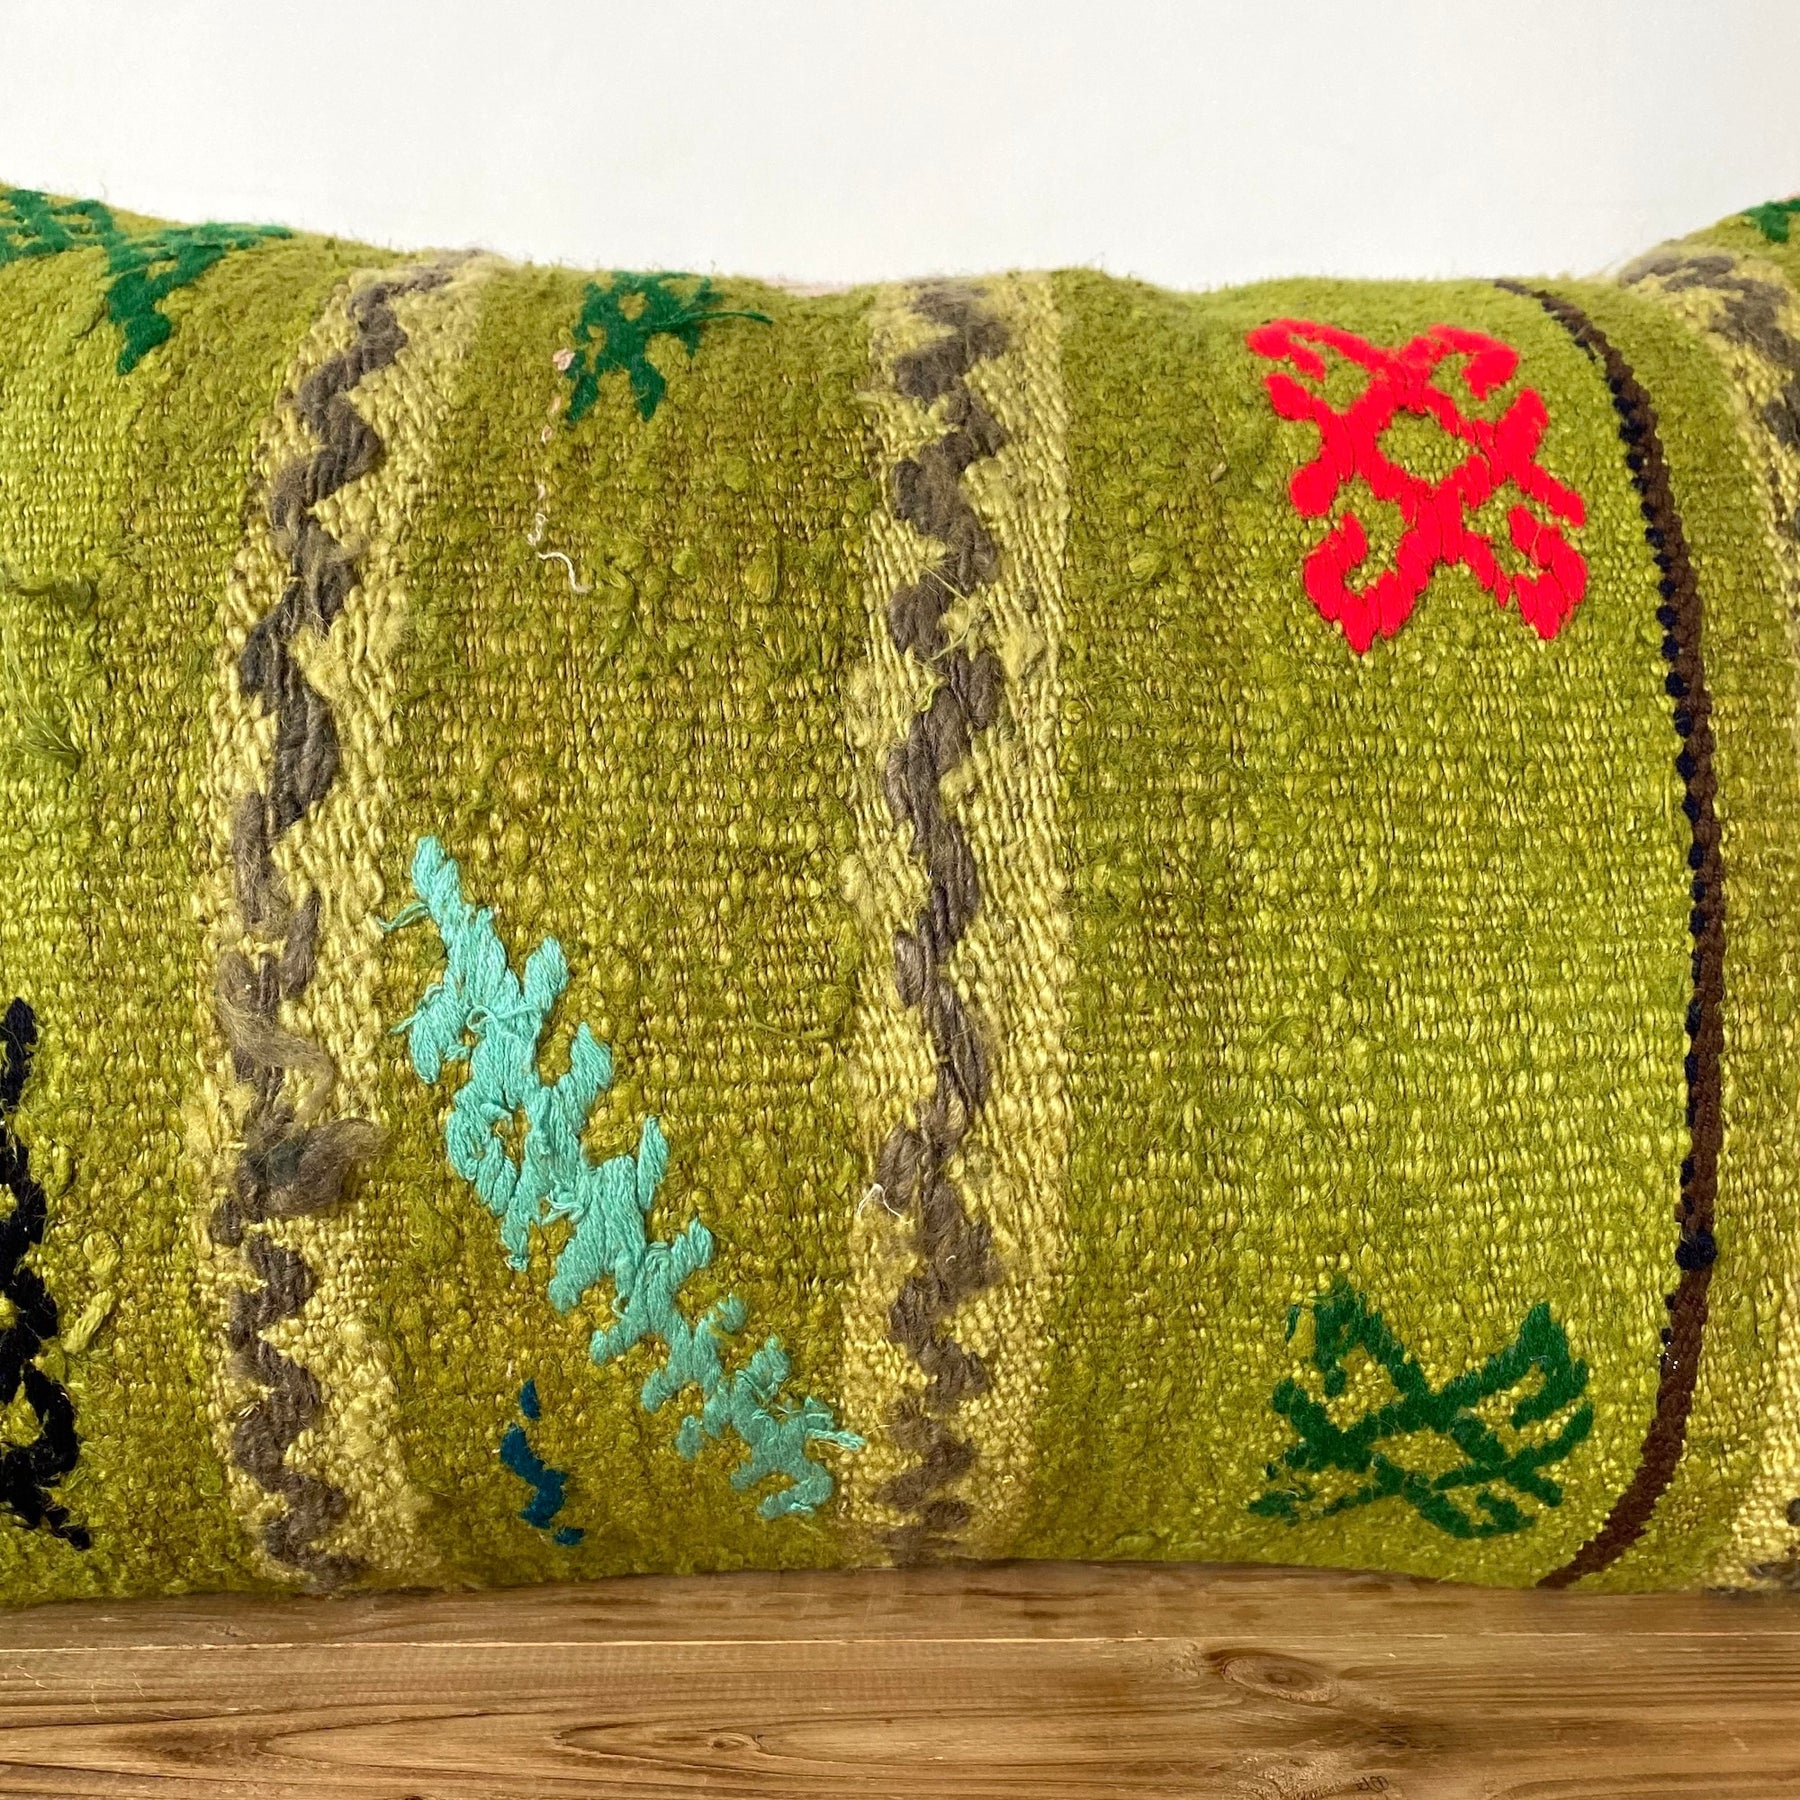 Gervis - Olive Green Hemp Pillow Cover - kudenrugs